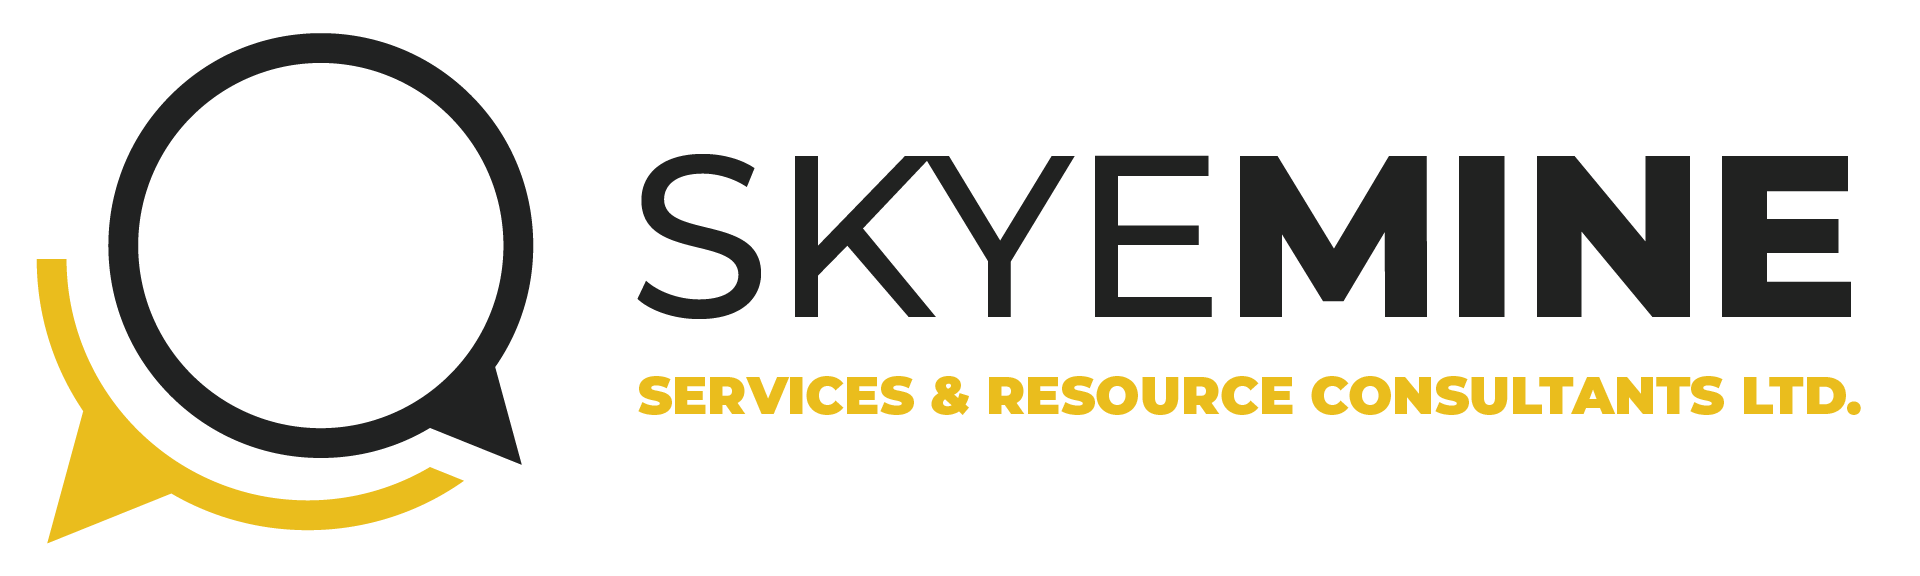 Skye Mine Services